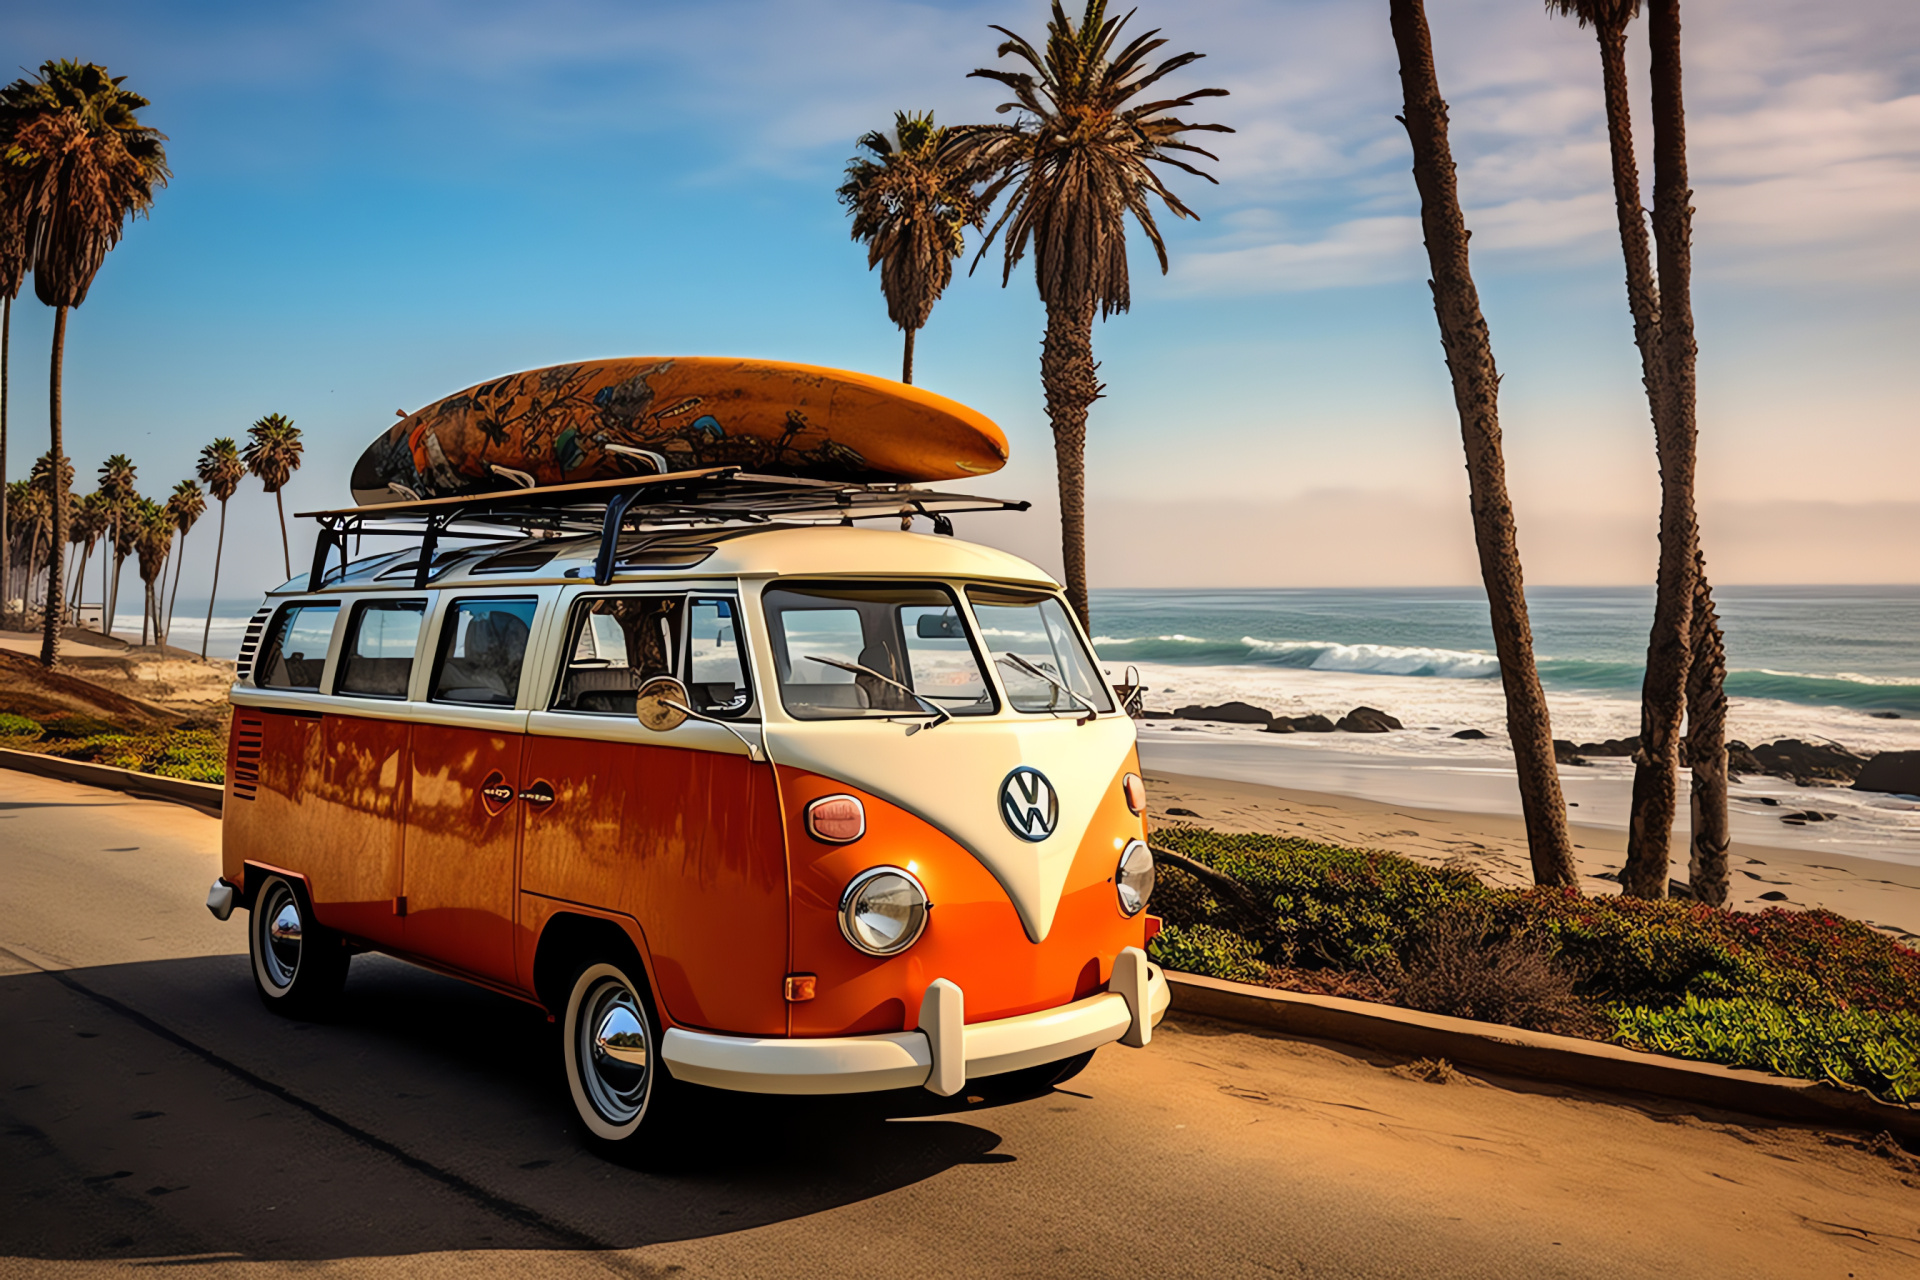 VW Bus journey, California coastal scenery, Highway 1, beach culture, Los Angeles palm skyline, HD Desktop Wallpaper